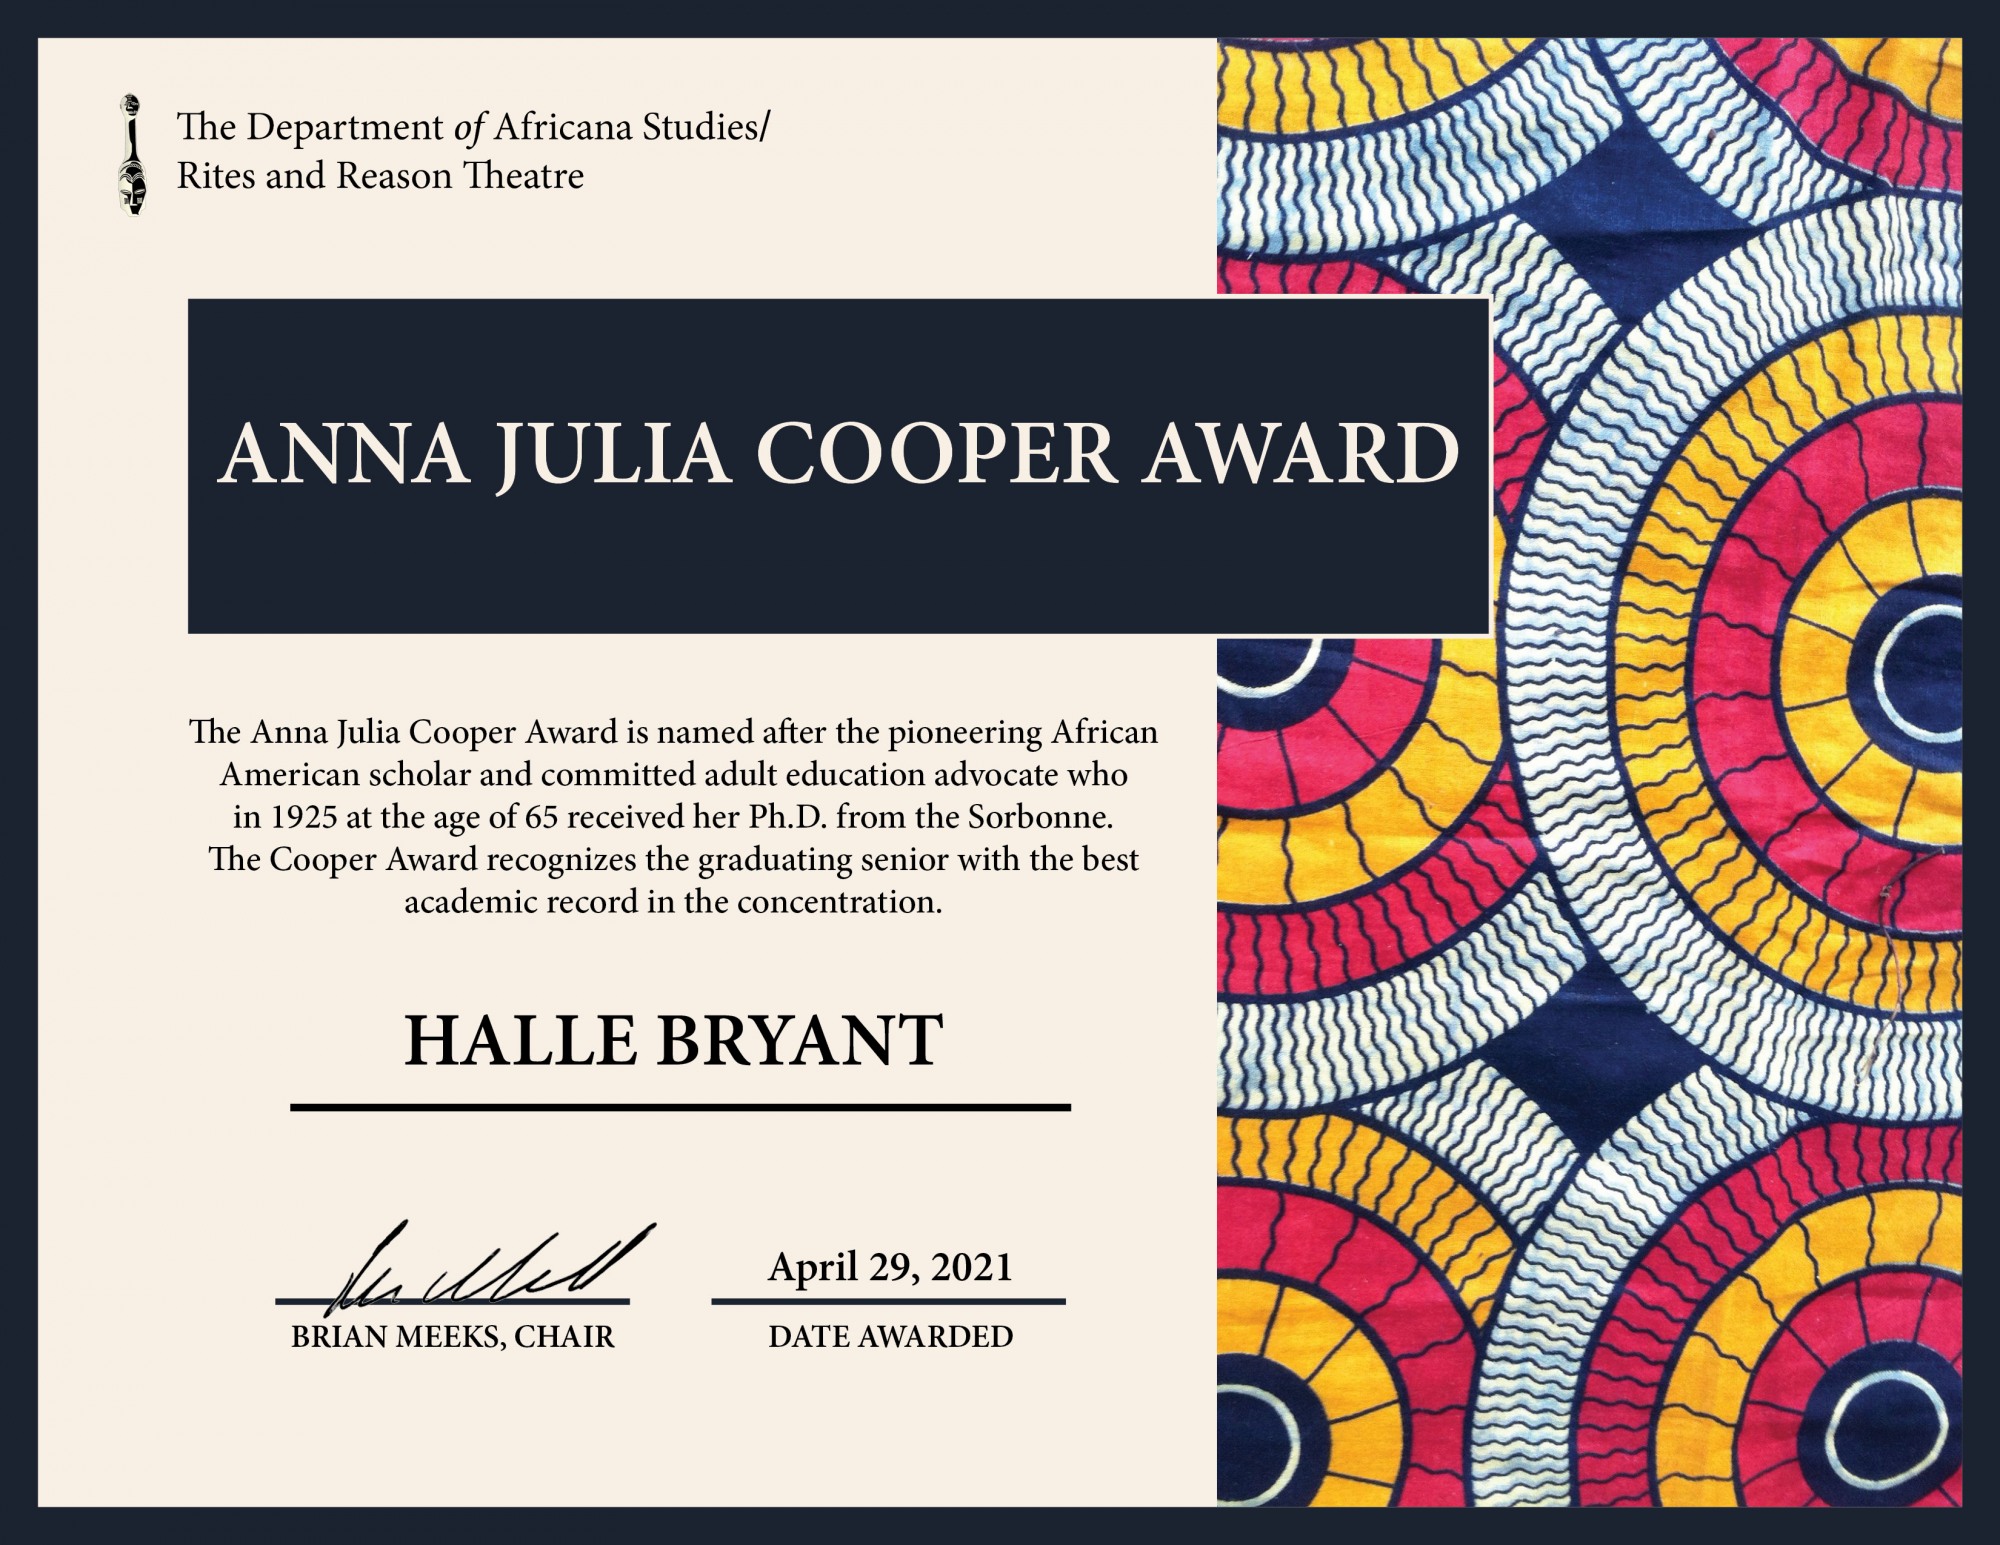 Anna Julia Cooper Award, Halle Bryant